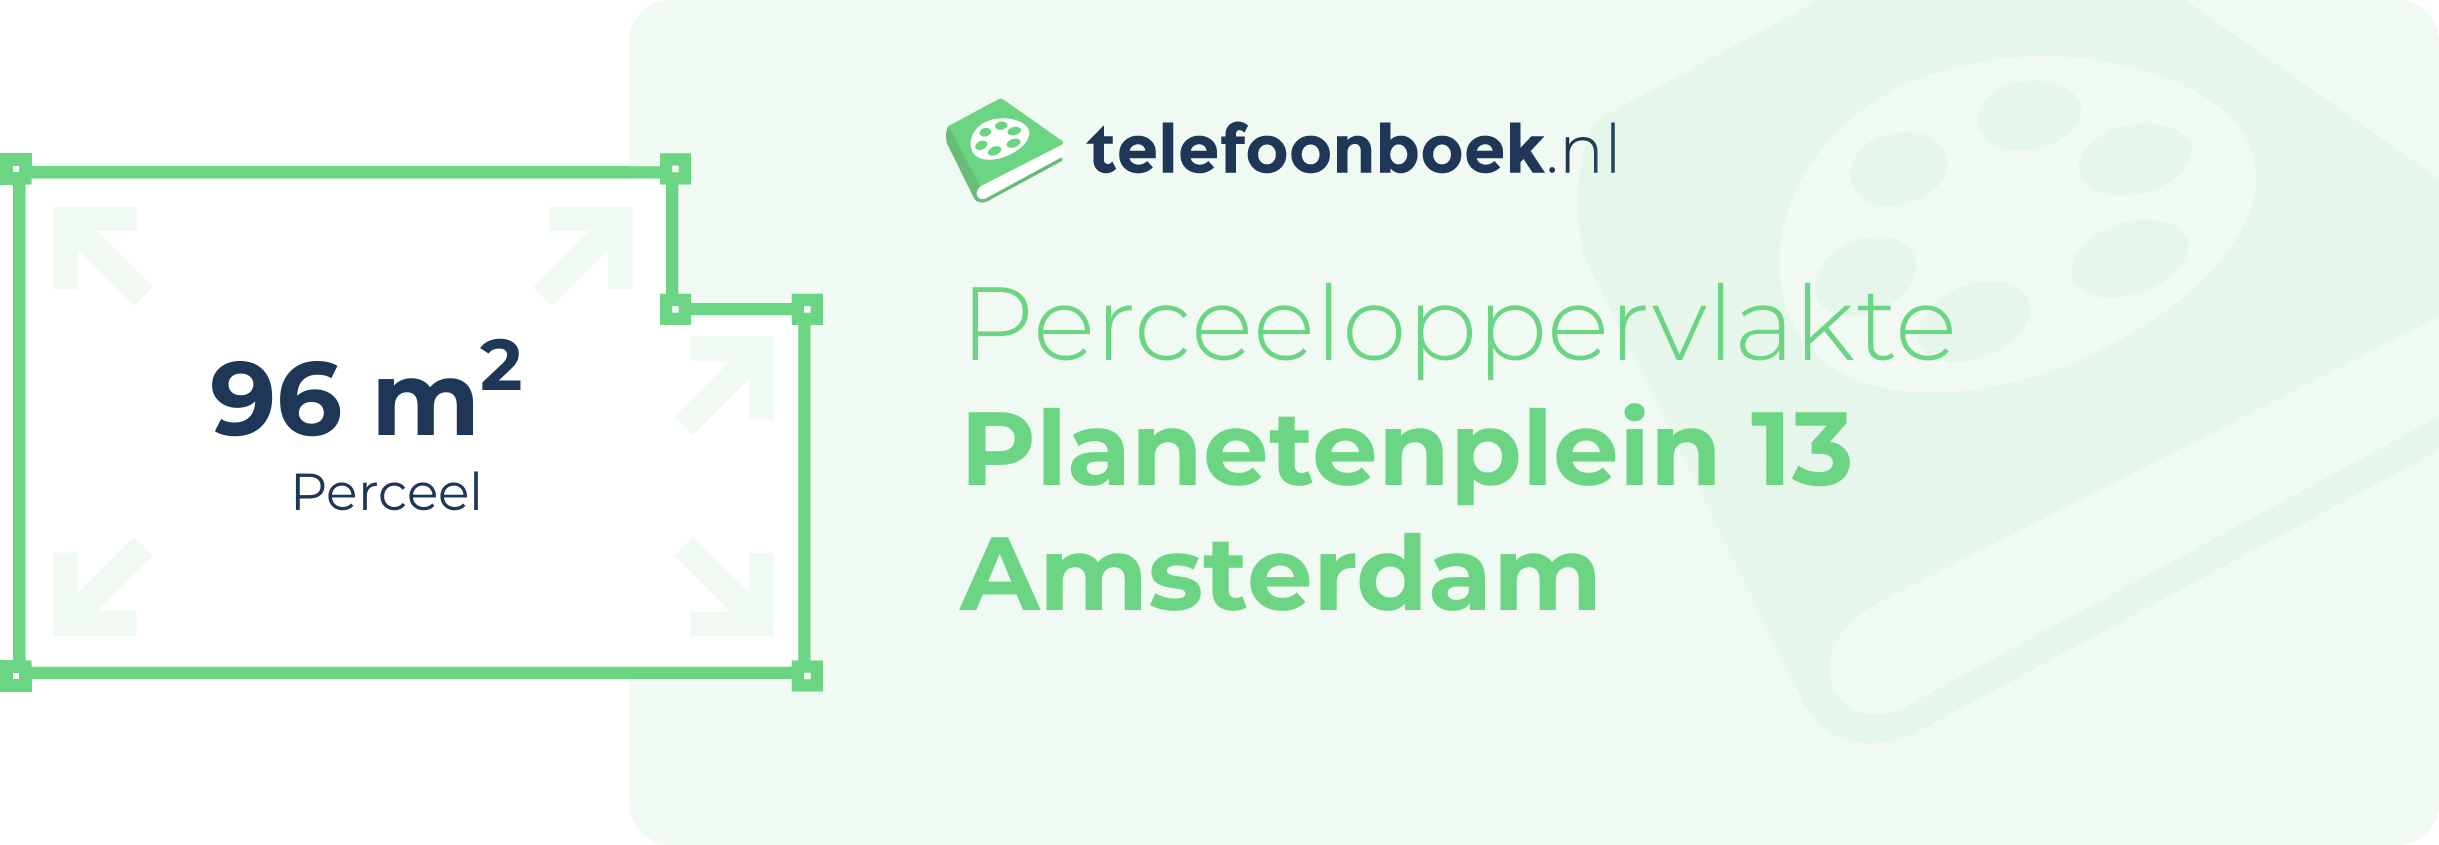 Perceeloppervlakte Planetenplein 13 Amsterdam